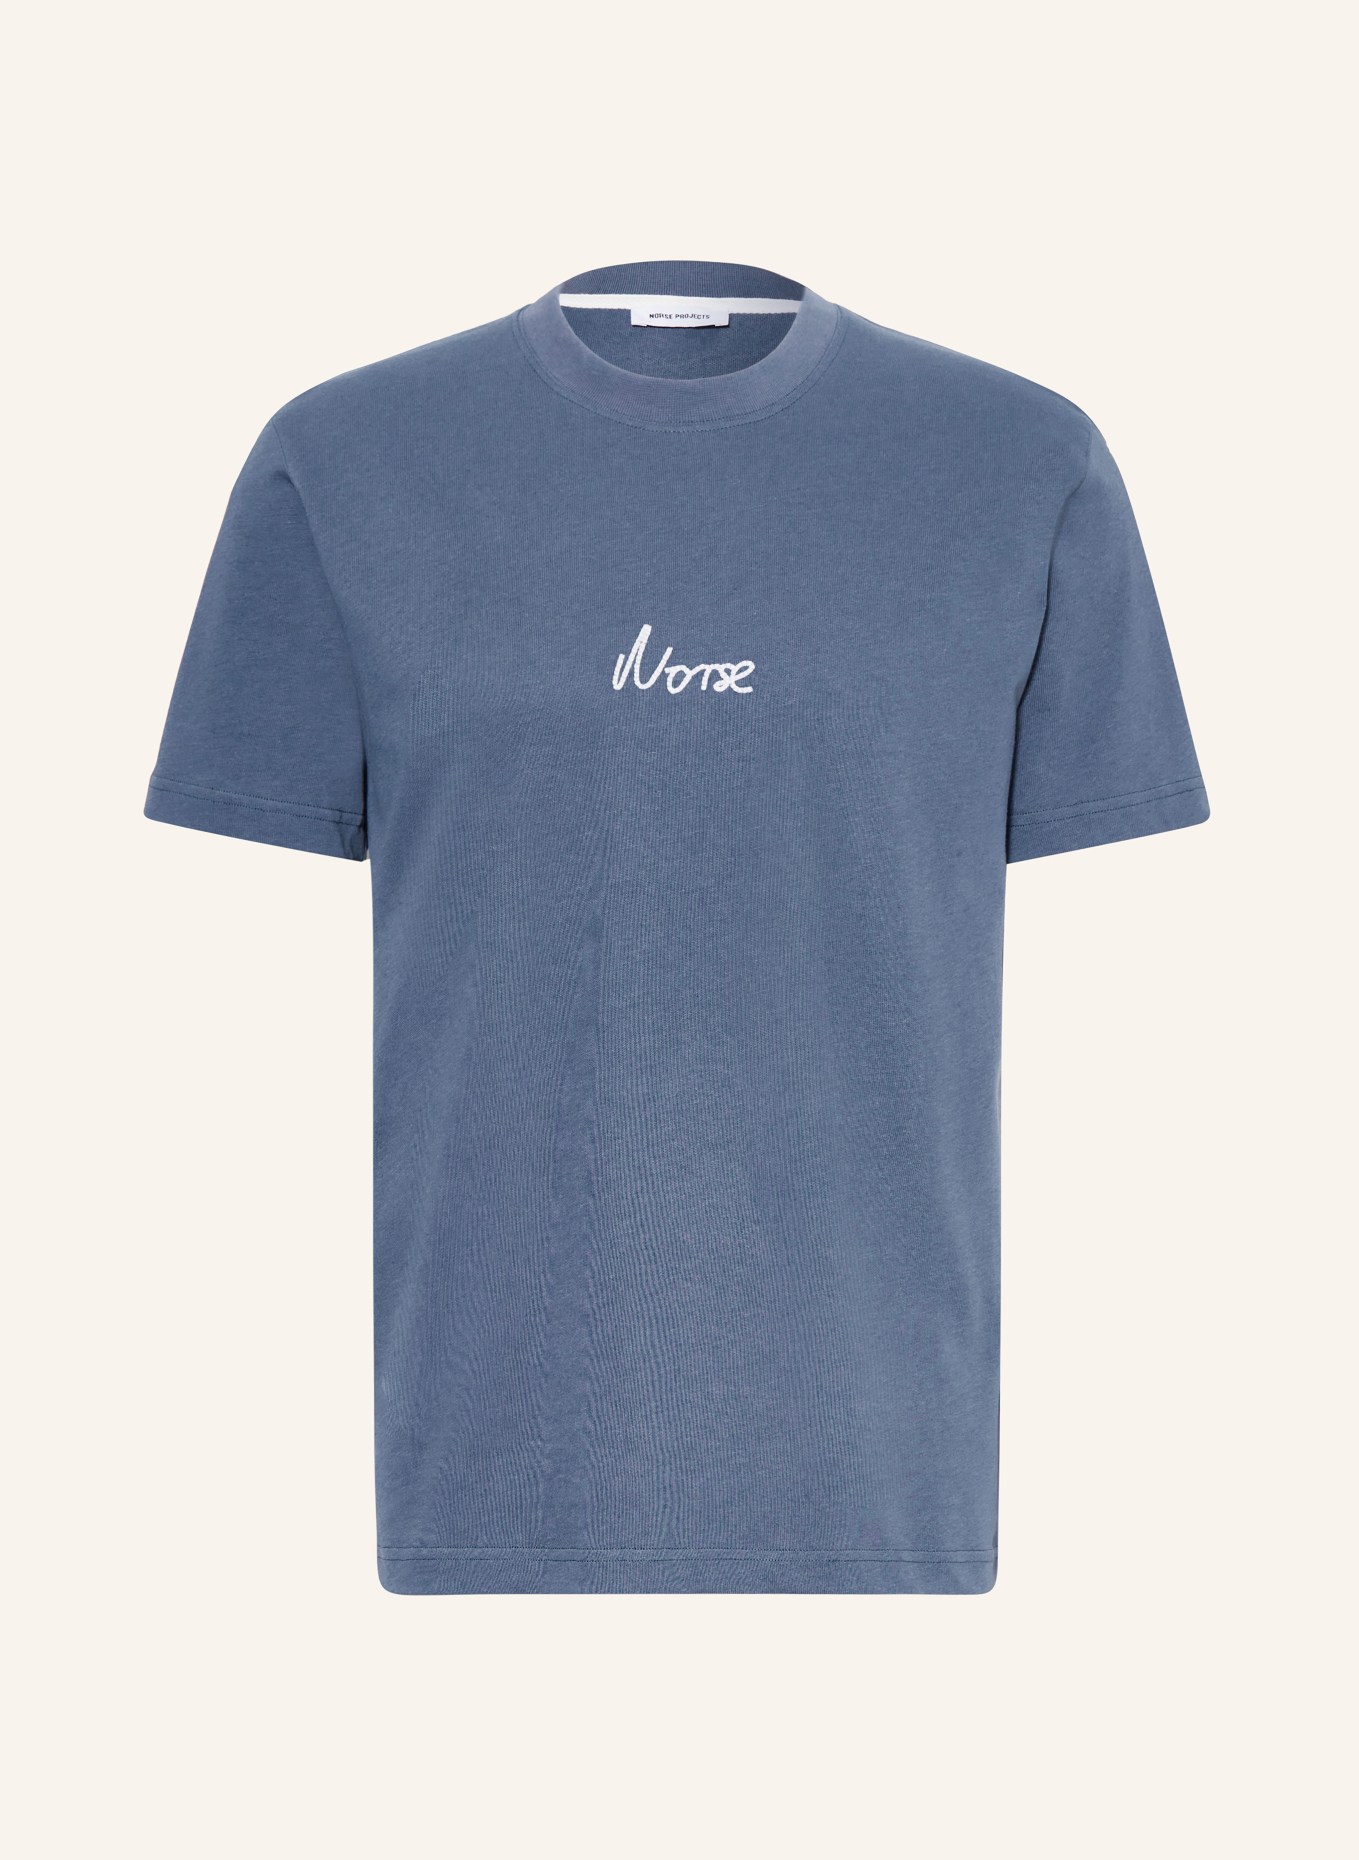 NORSE PROJECTS T-Shirt JOHANNES, Farbe: BLAU (Bild 1)